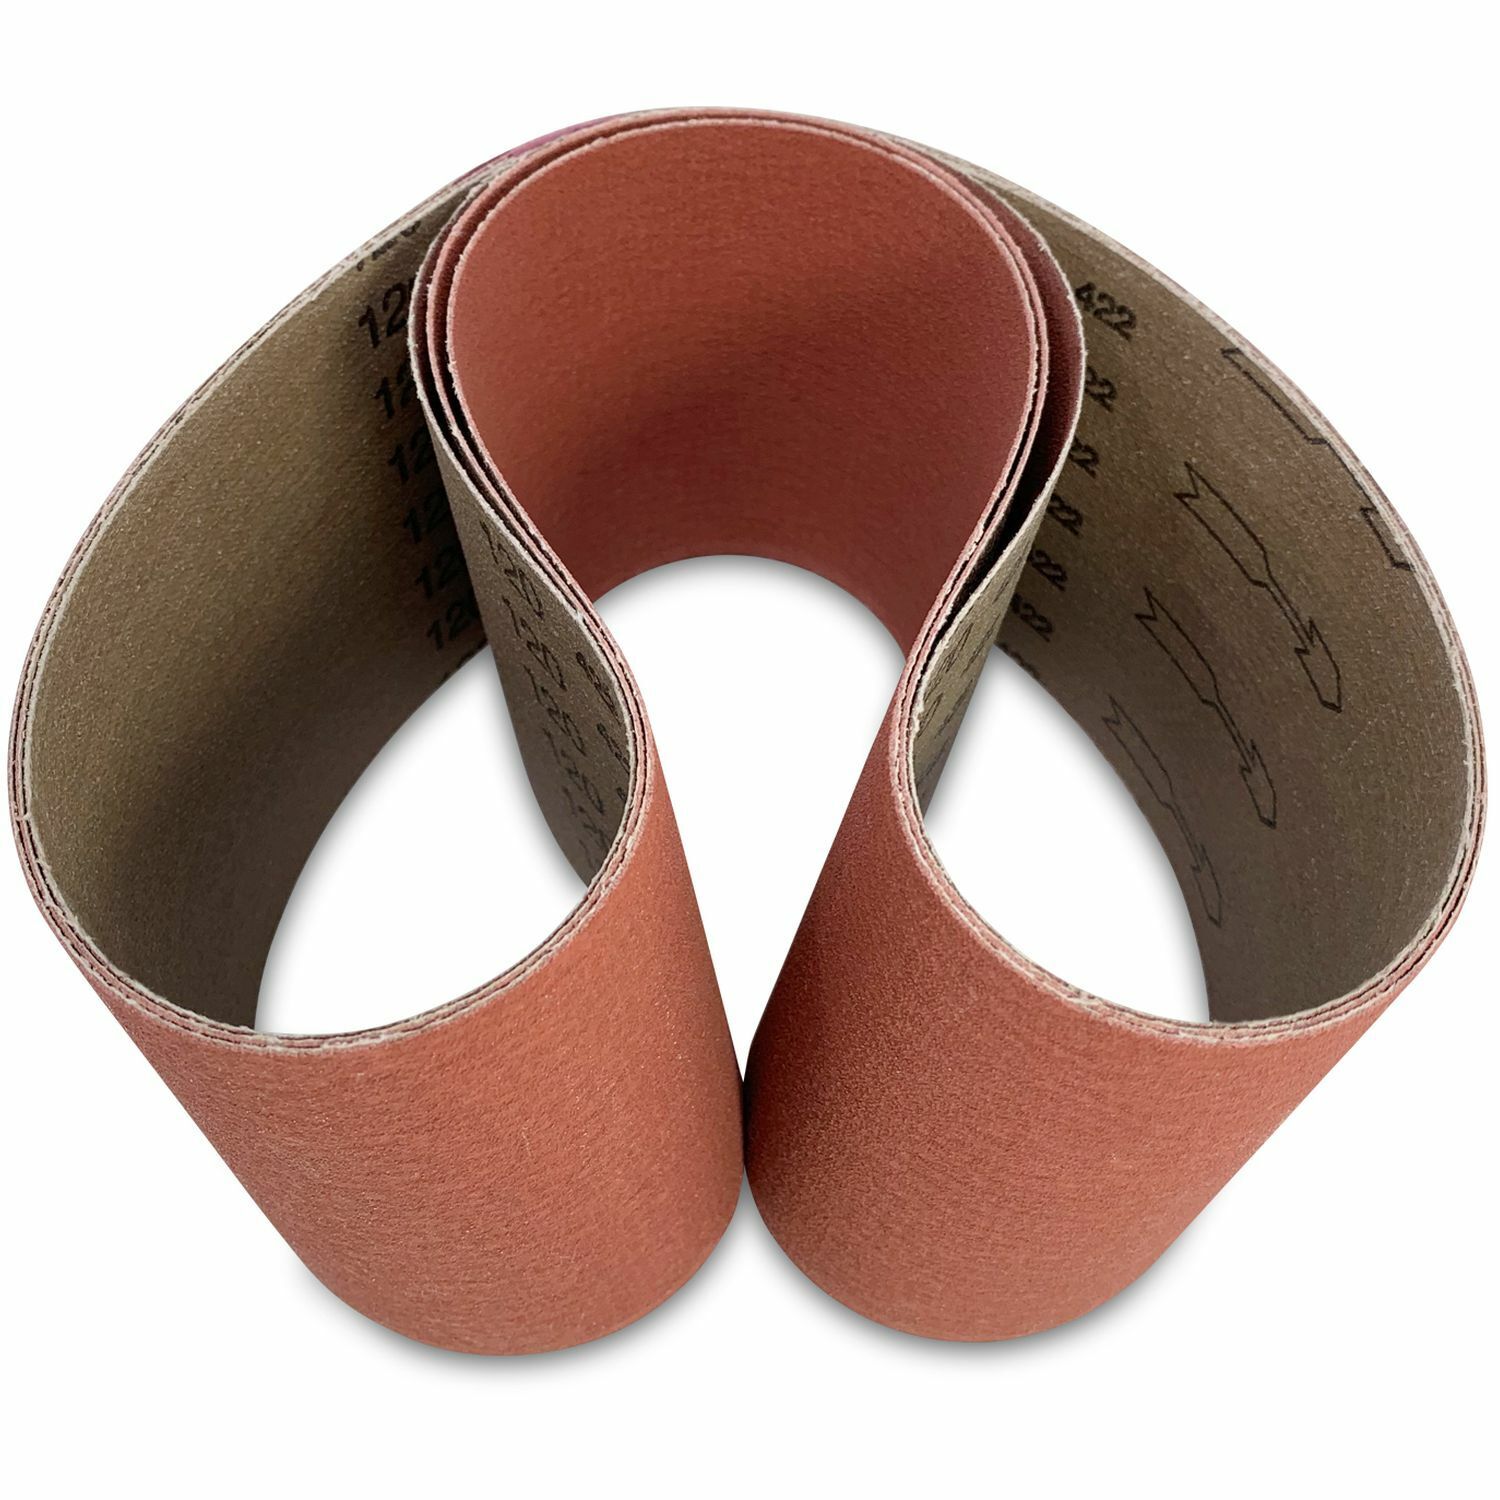 6 Fresno Mall X 48 Inch quality assurance 60 Grit Metal Grinding Belts 2 Ceramic Pack Sanding